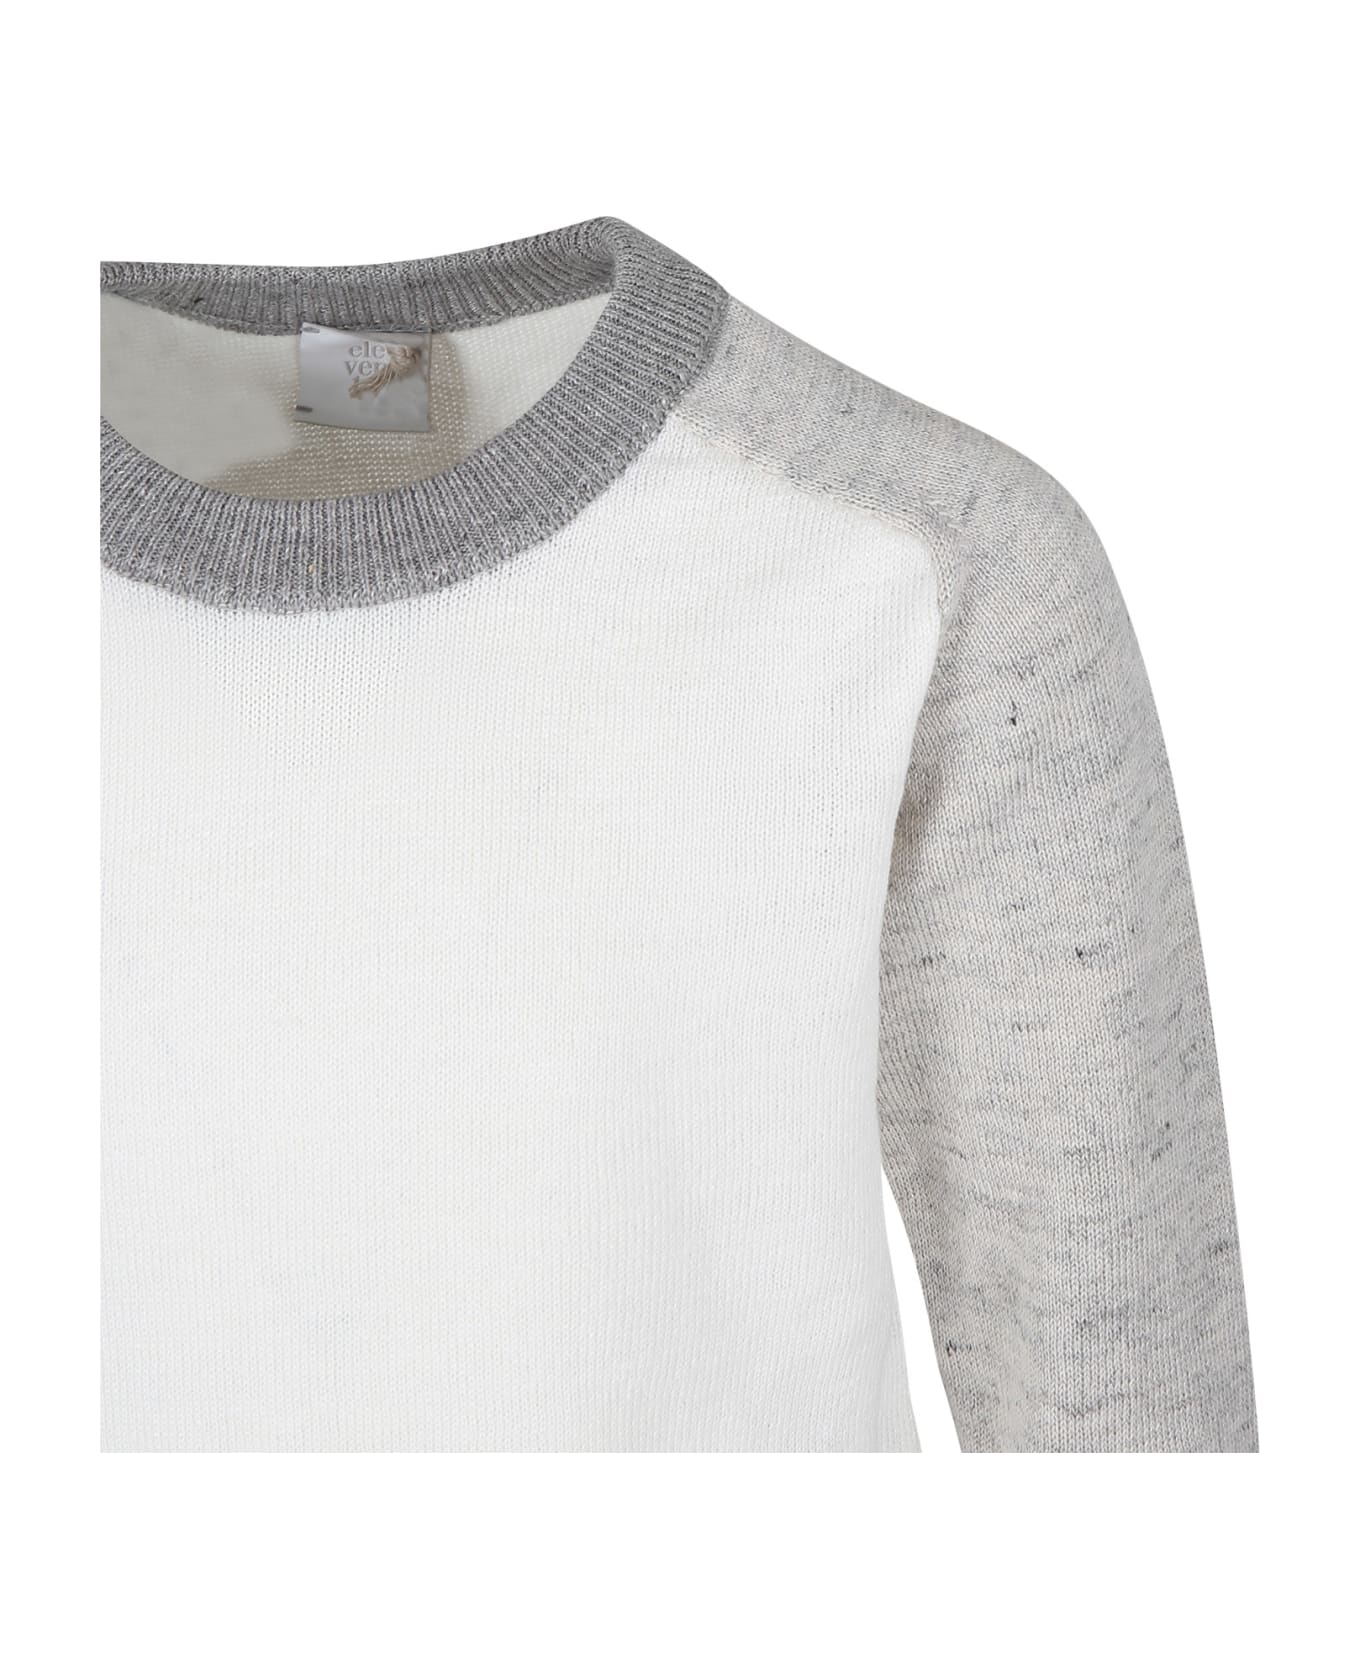 Eleventy Ivory Sweater For Boy With Logo - Ivory